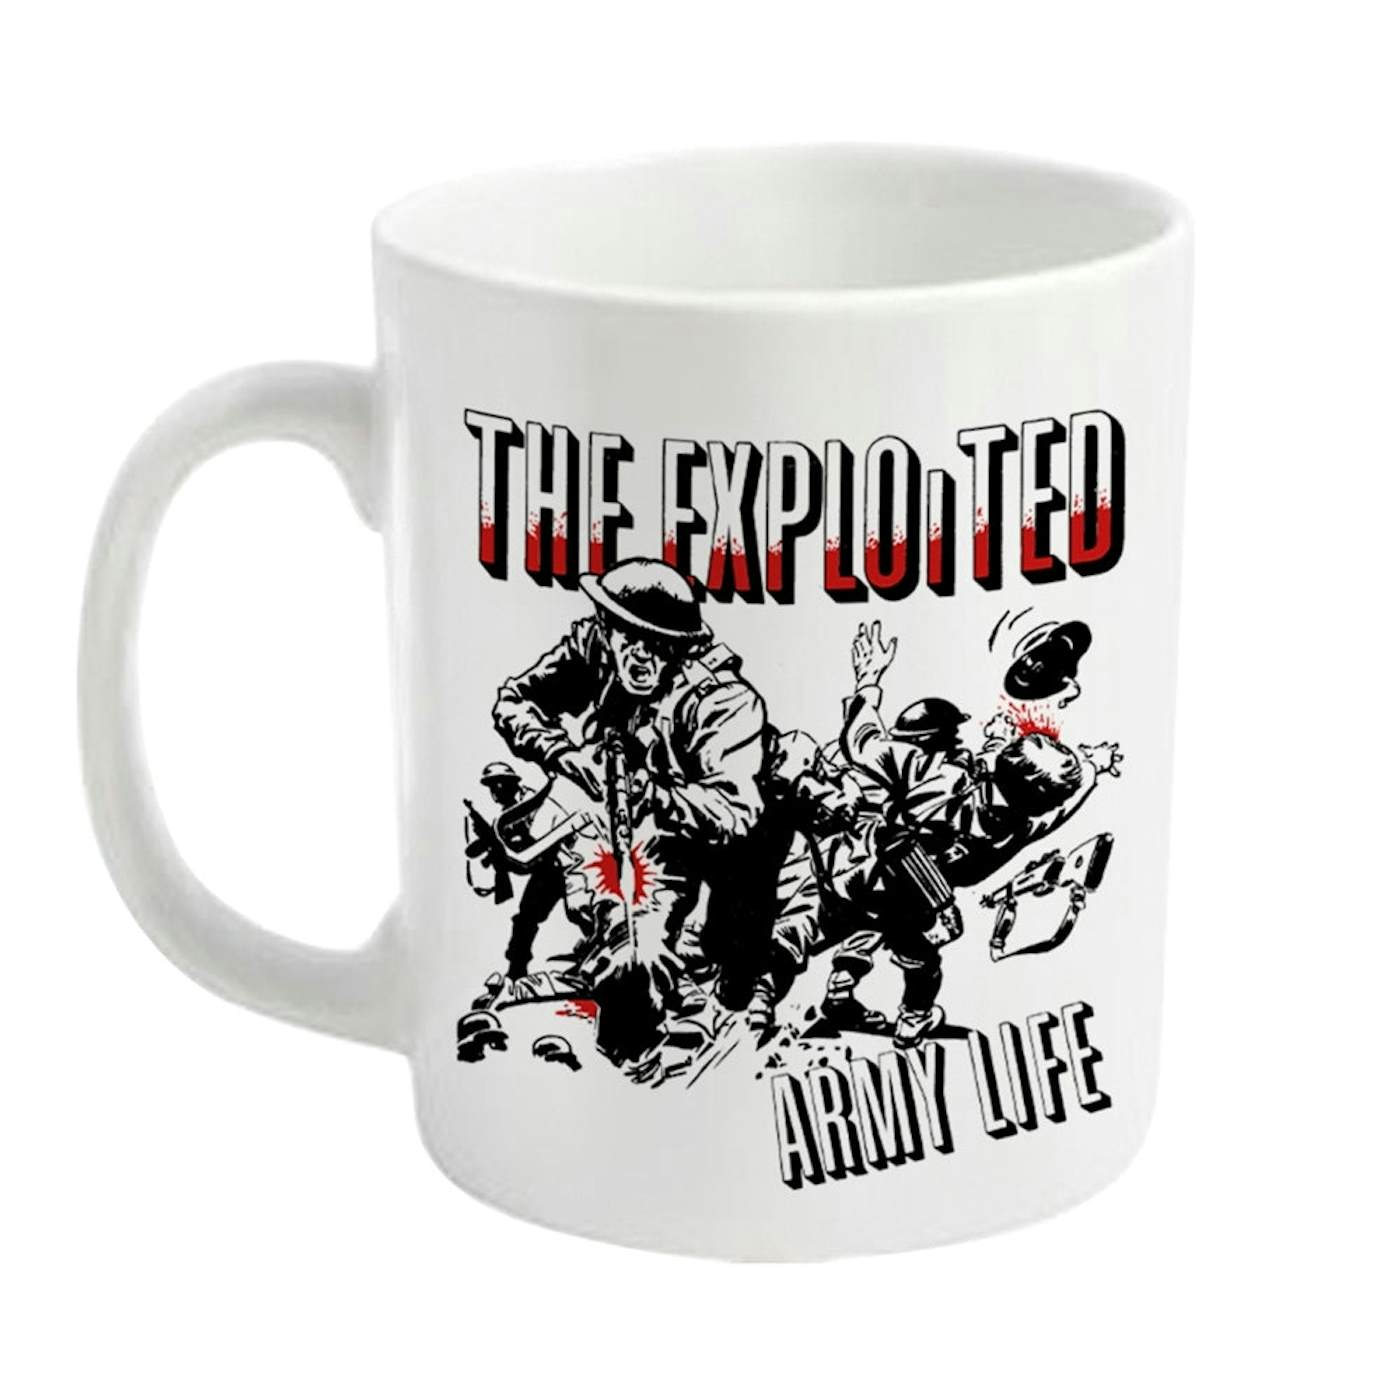 The Exploited Mug - Army Life (White)